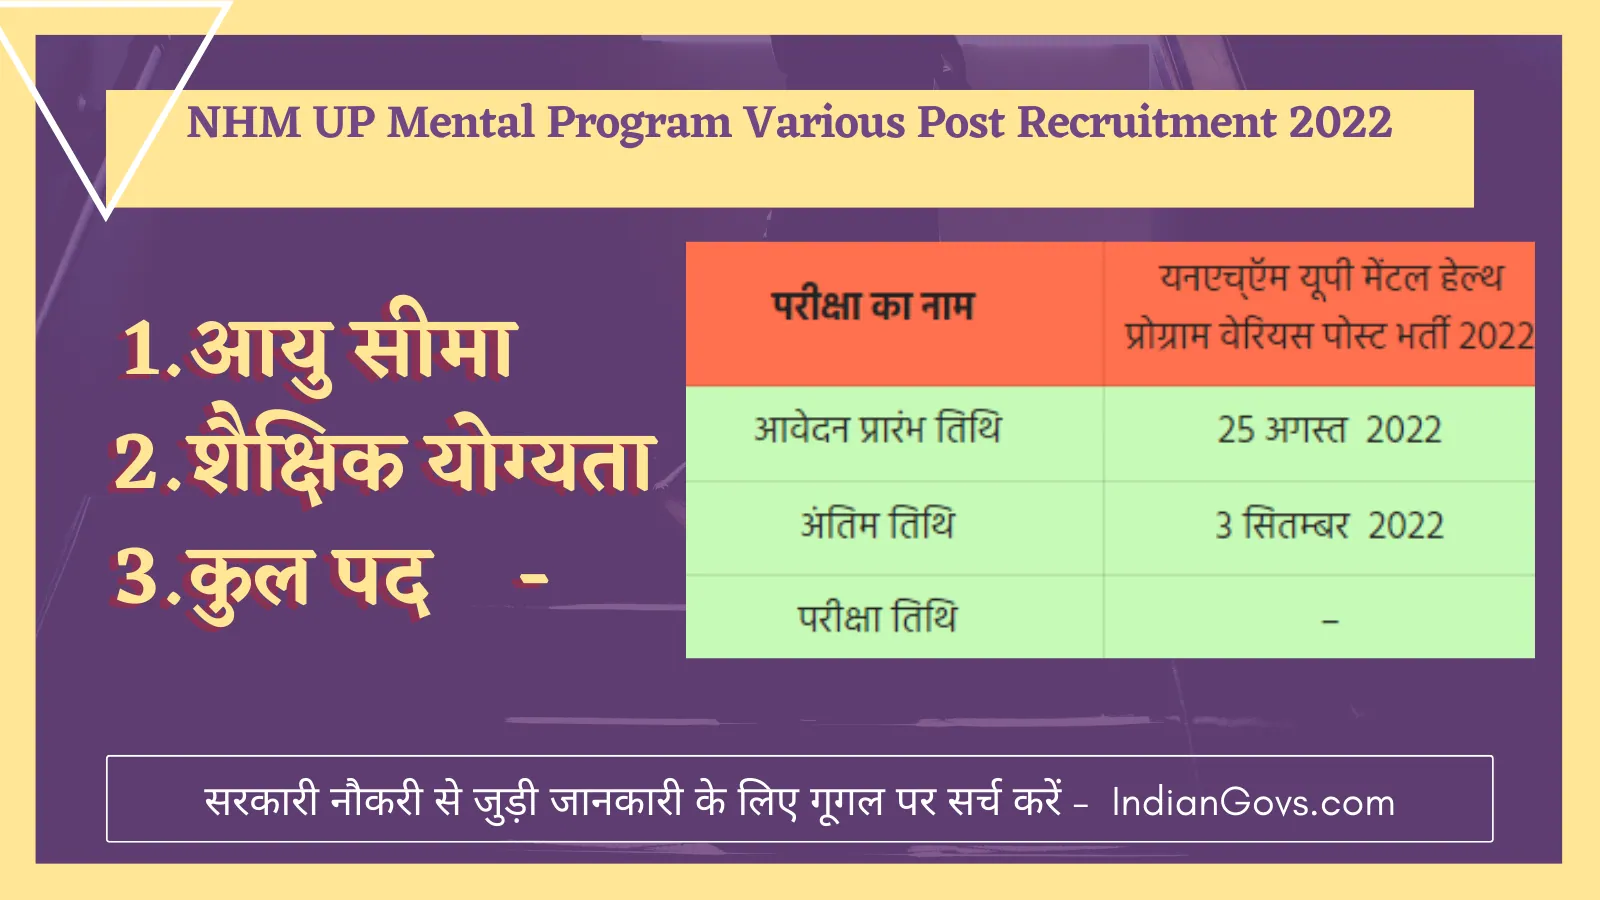 NHM UP Mental Health Program Various Post Recruitment 2022